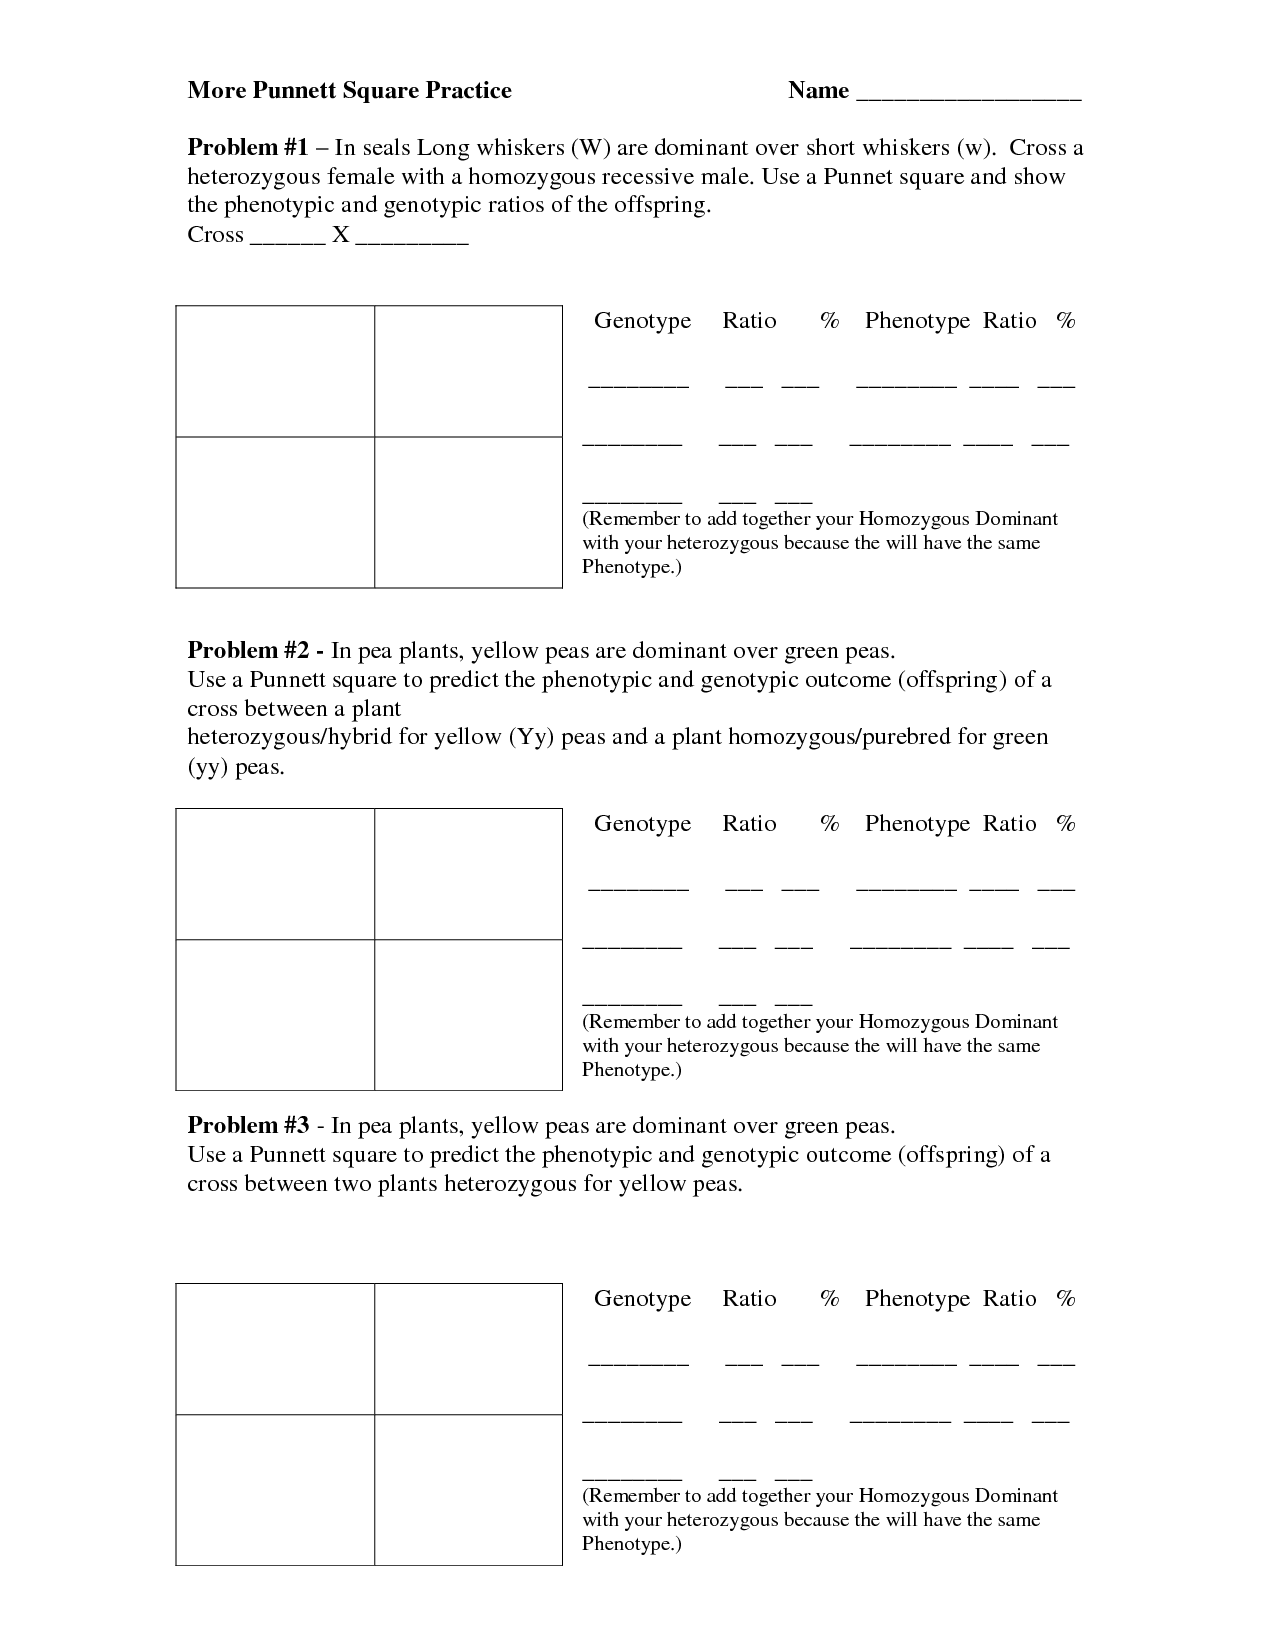 Punnett Square Practice Worksheet Answers Image